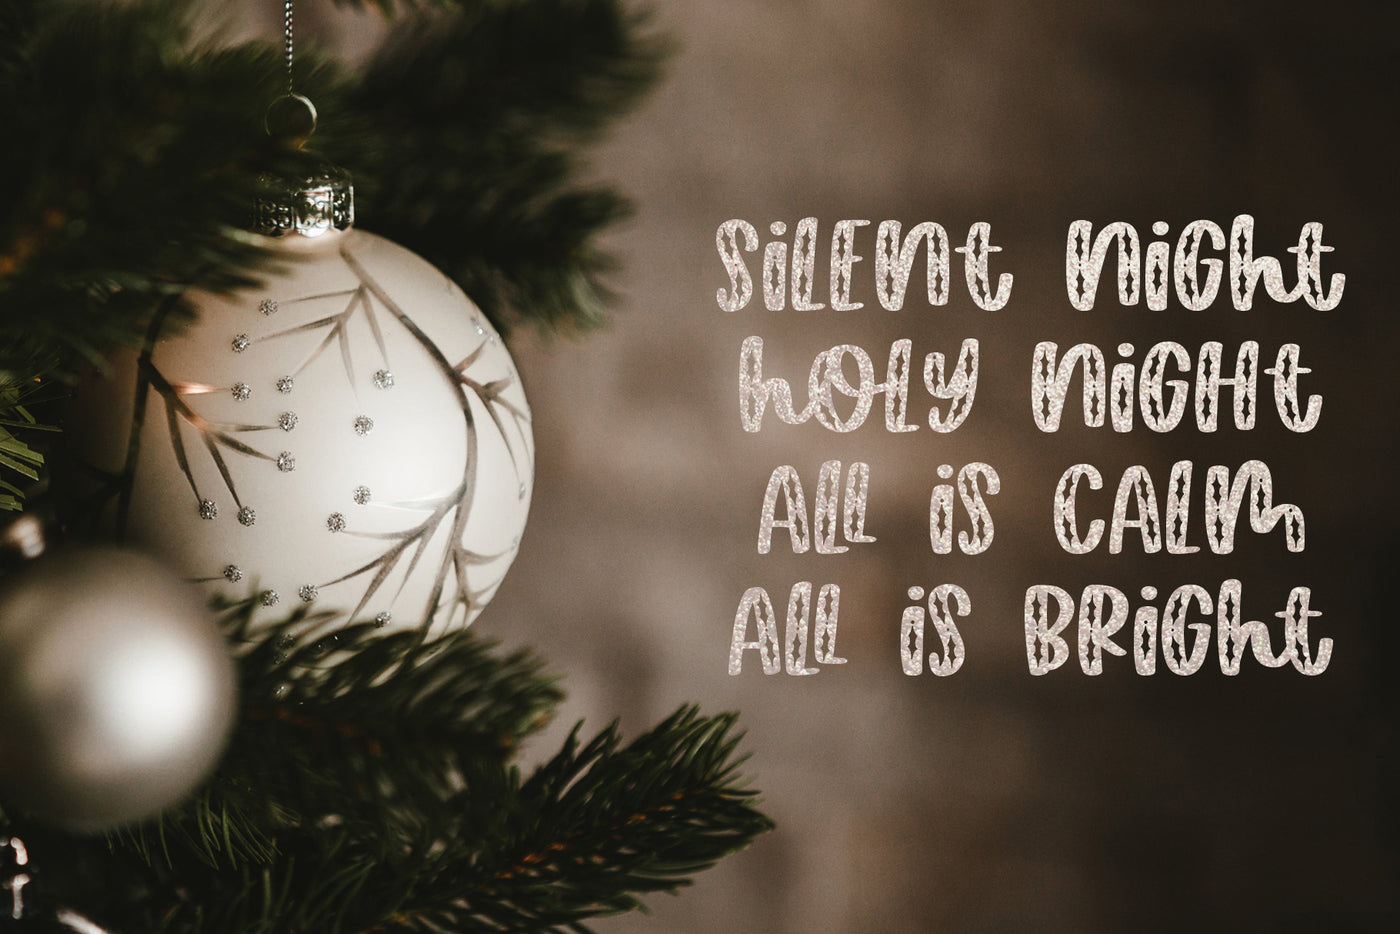 Happy Hollydays, Christmas Font - JordynAlisonDesigns